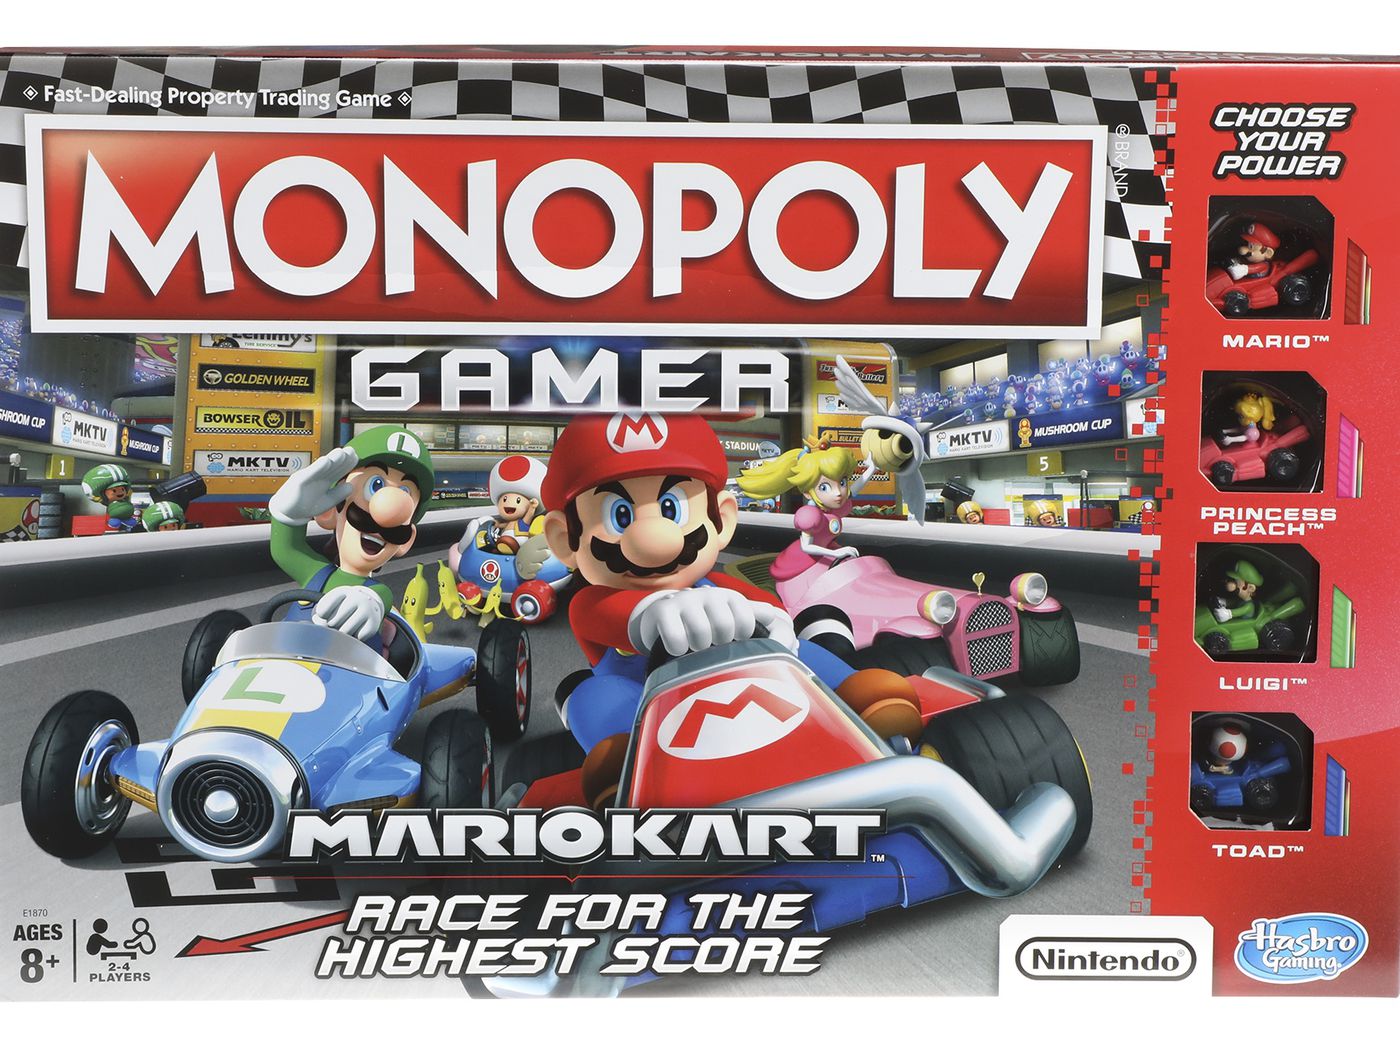 Monopoly_Gamer_Mario_Kart_box